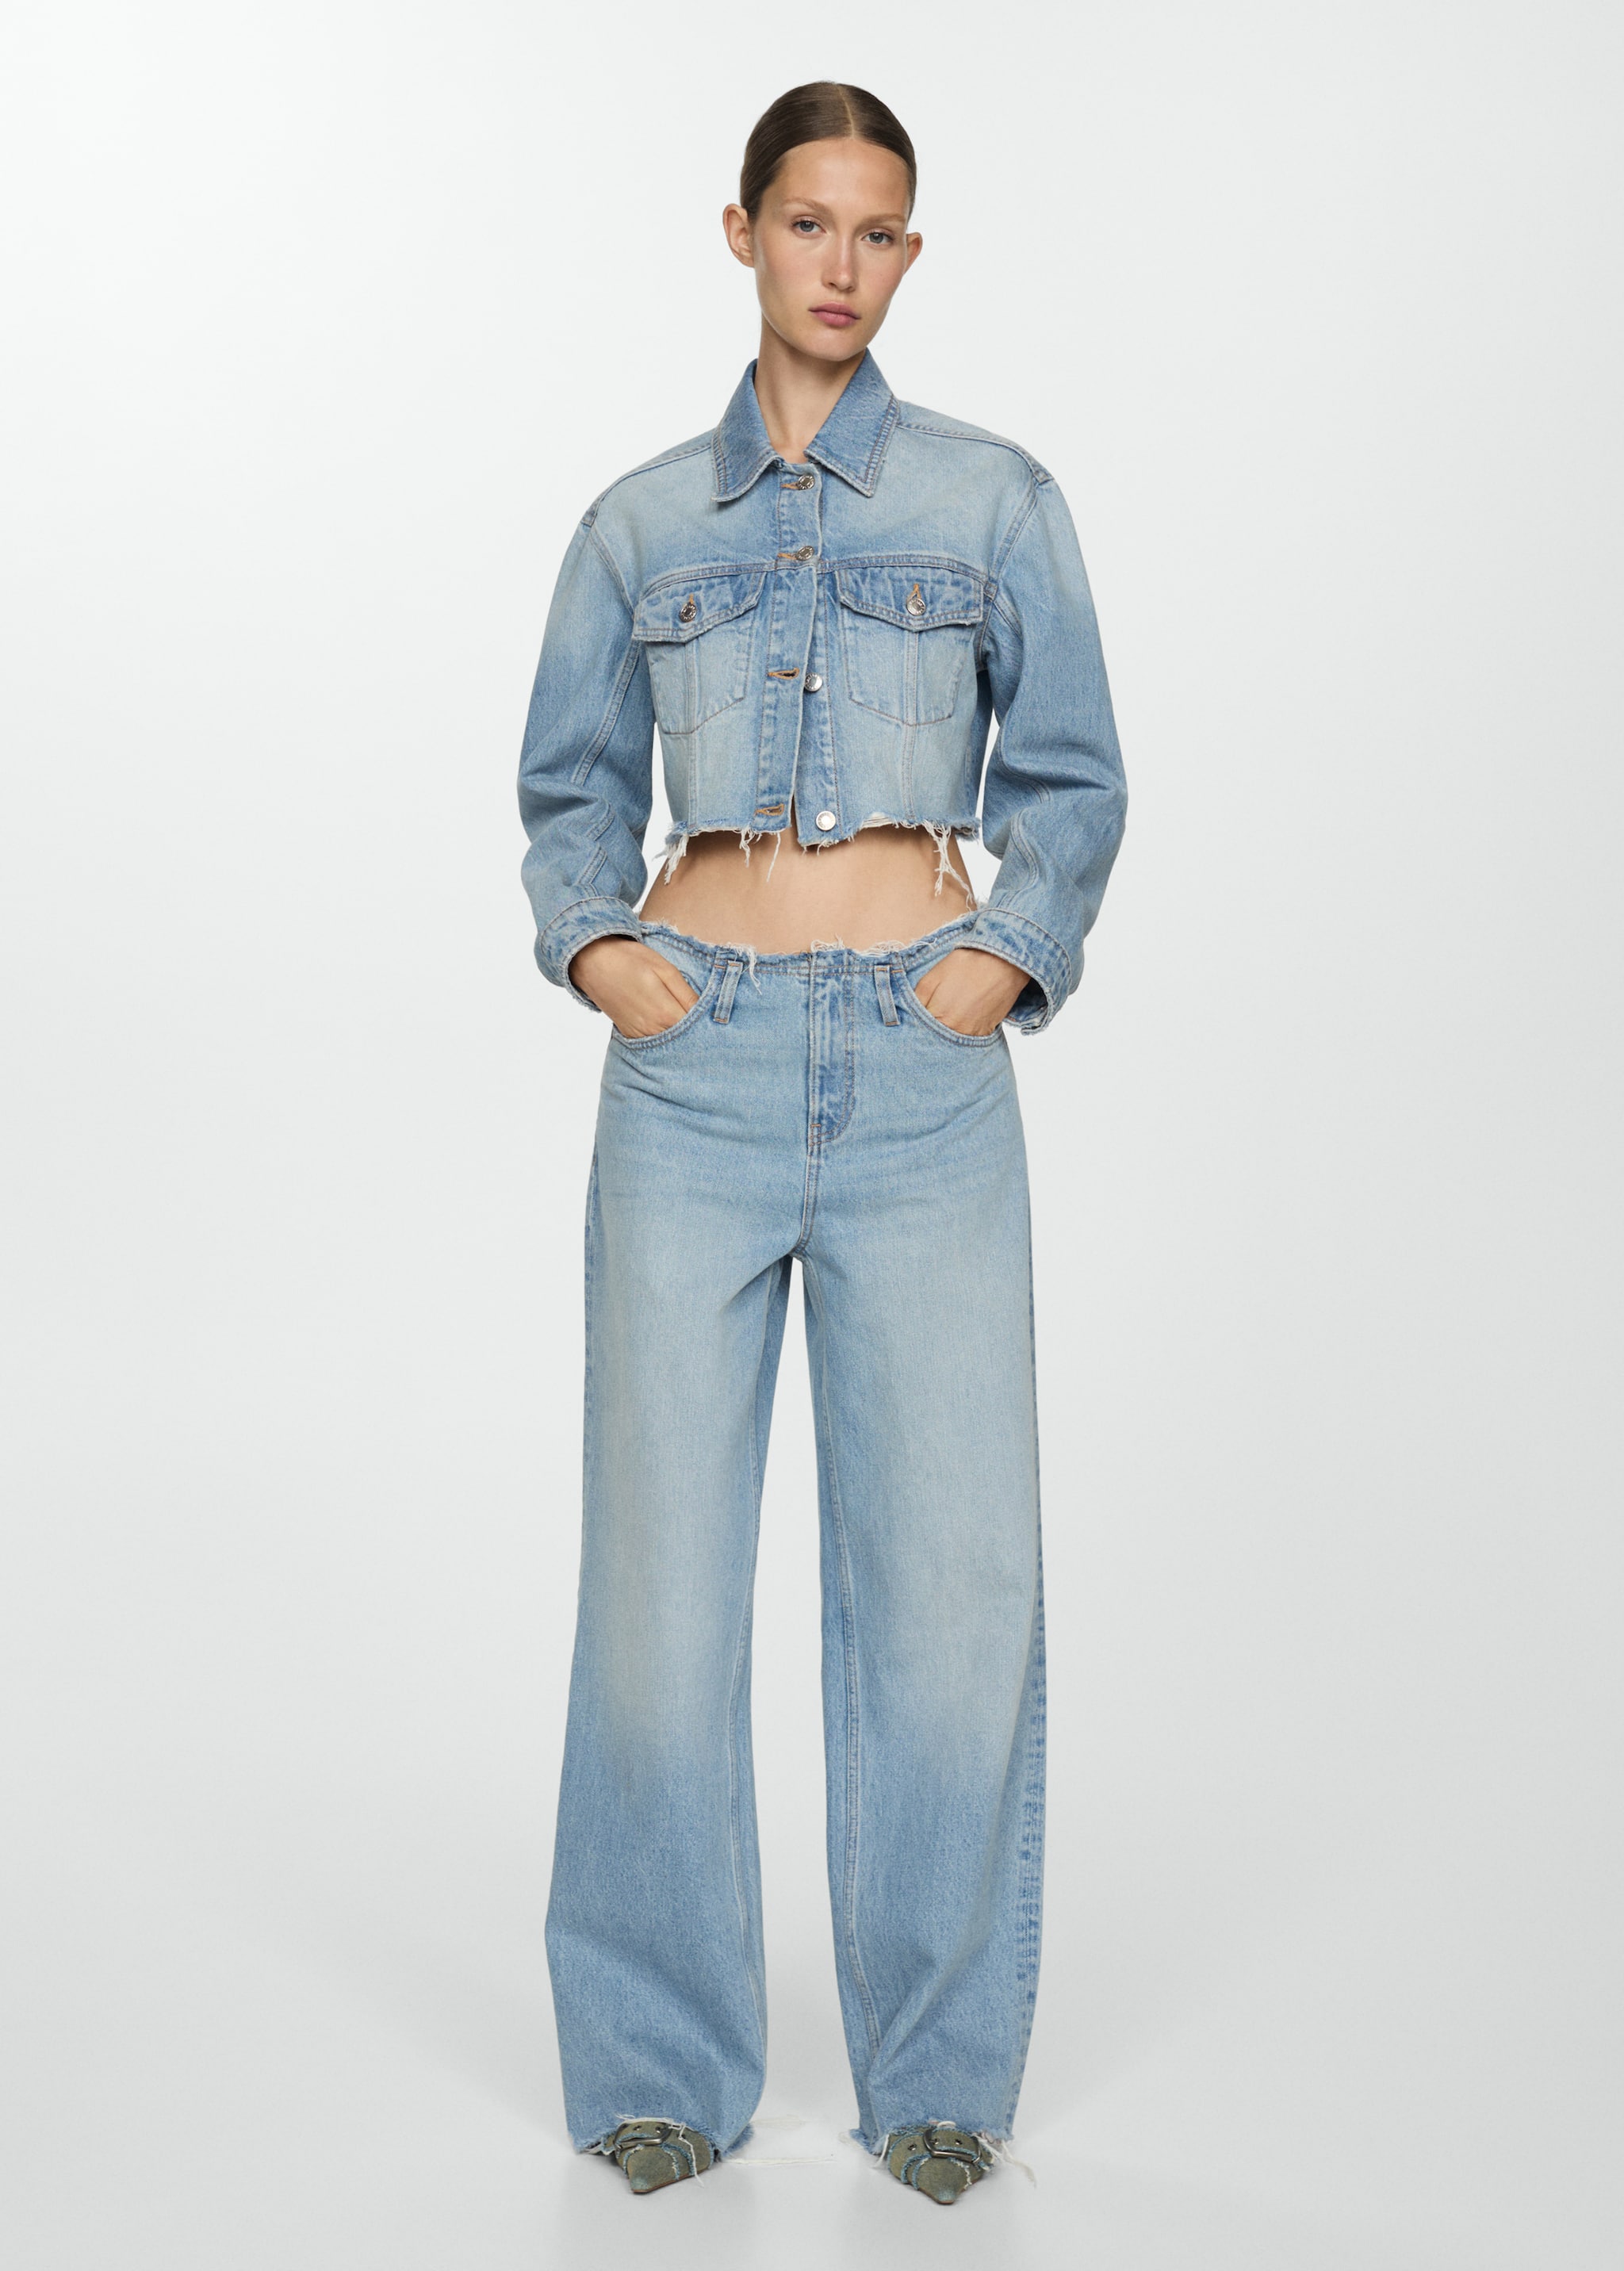 Wideleg jeans with frayed hem - General plane